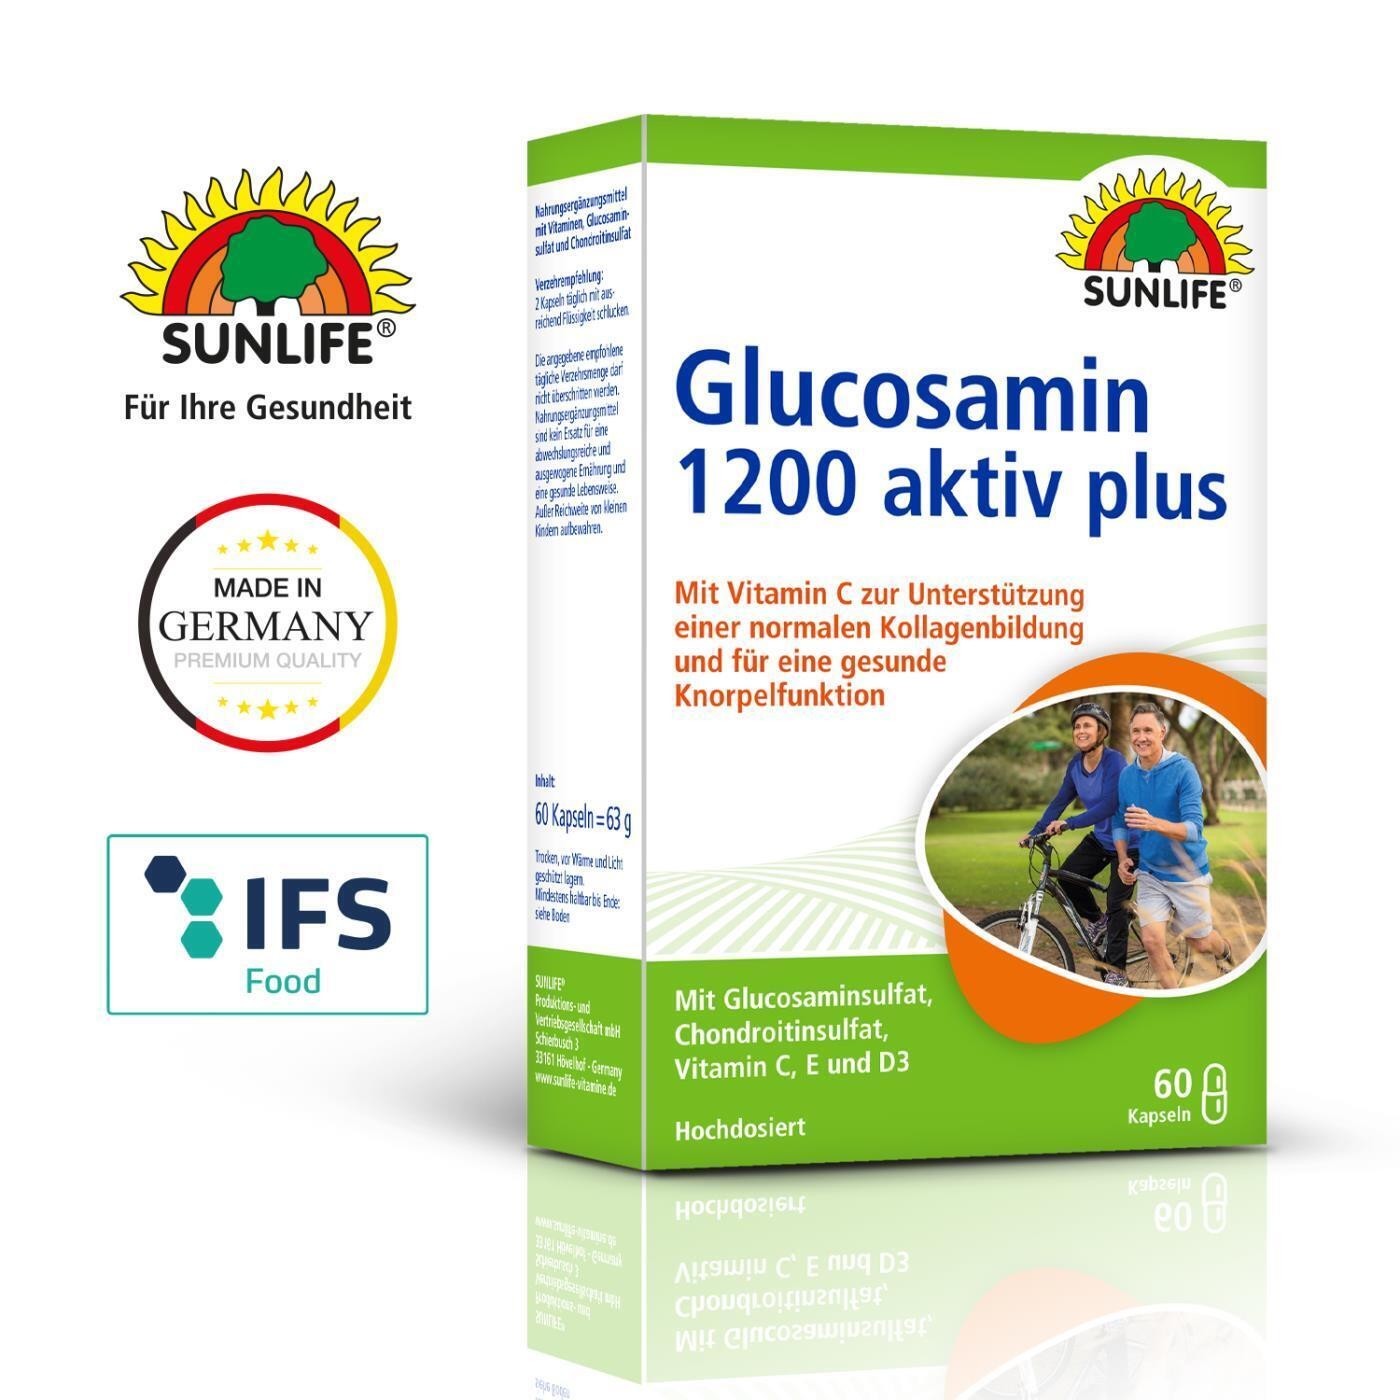 Sunlife Glucosamin 1200 aktiv plus unterstützt den Knorpel + Knochenaufbau 60 Stück